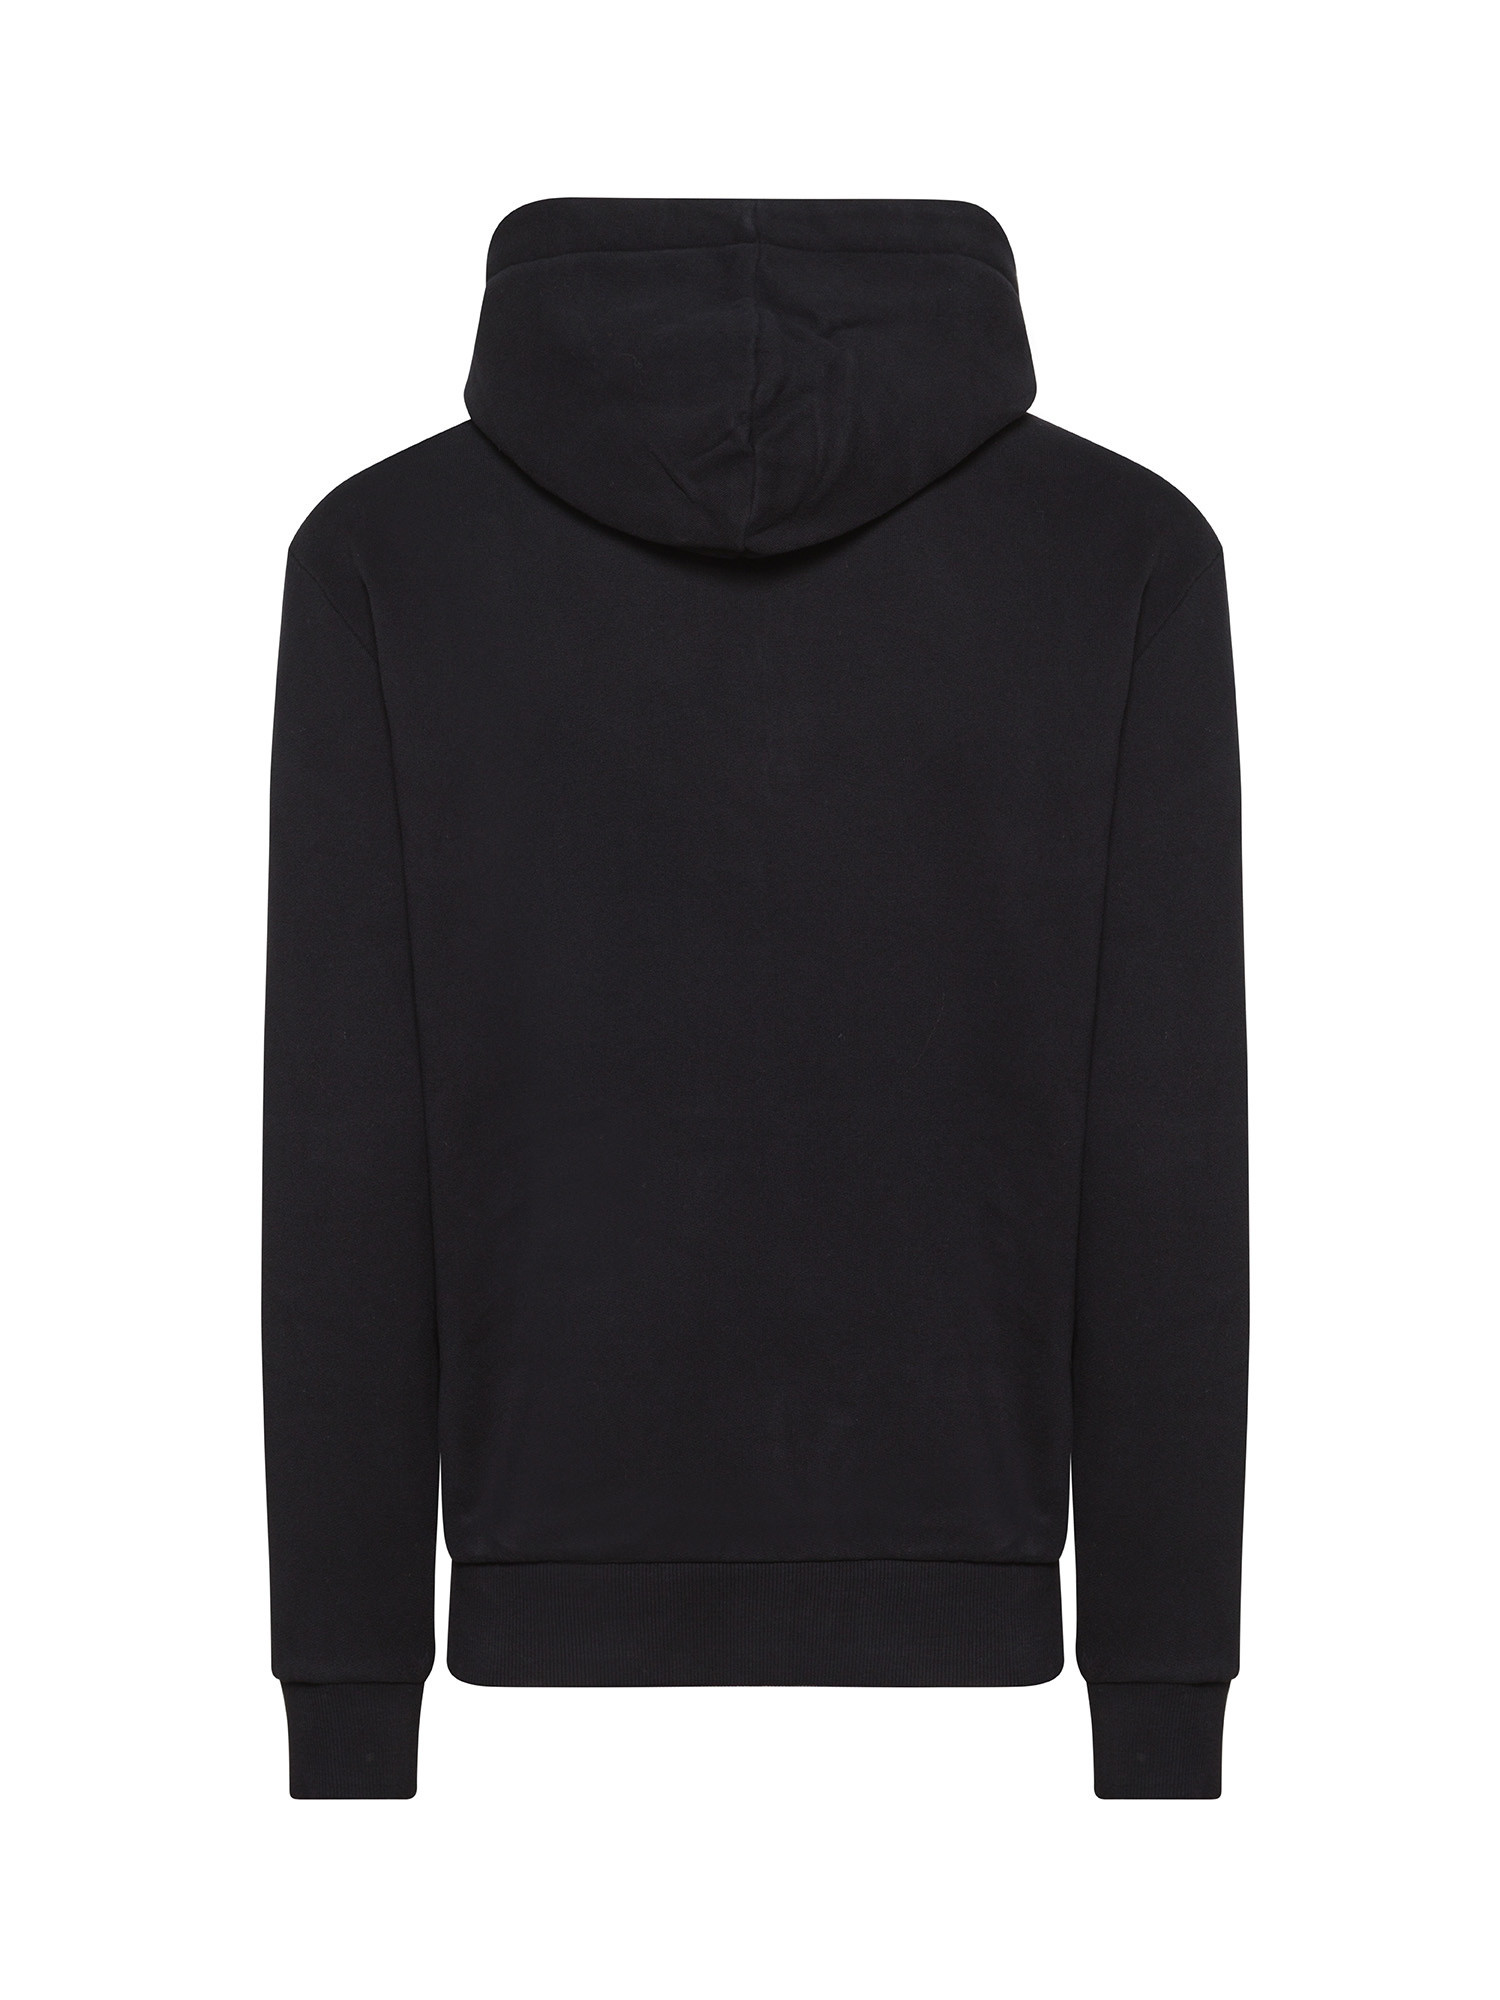 Superdry - Hooded sweatshirt with logo, Black, large image number 1